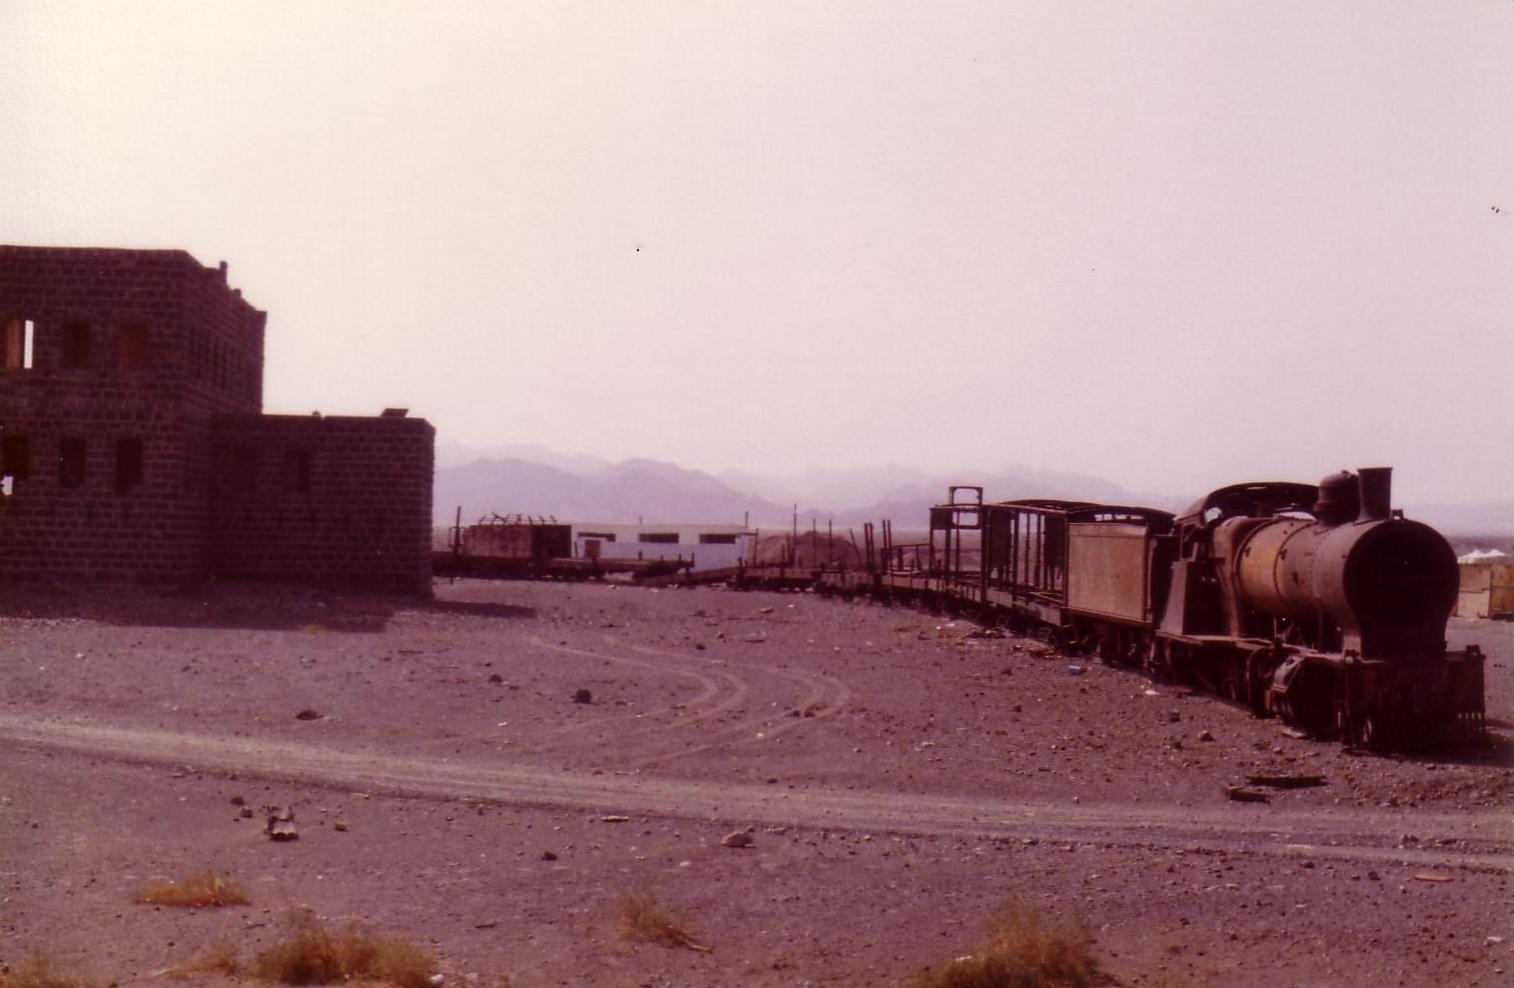 Hejaz Railway train at Al Buwayr